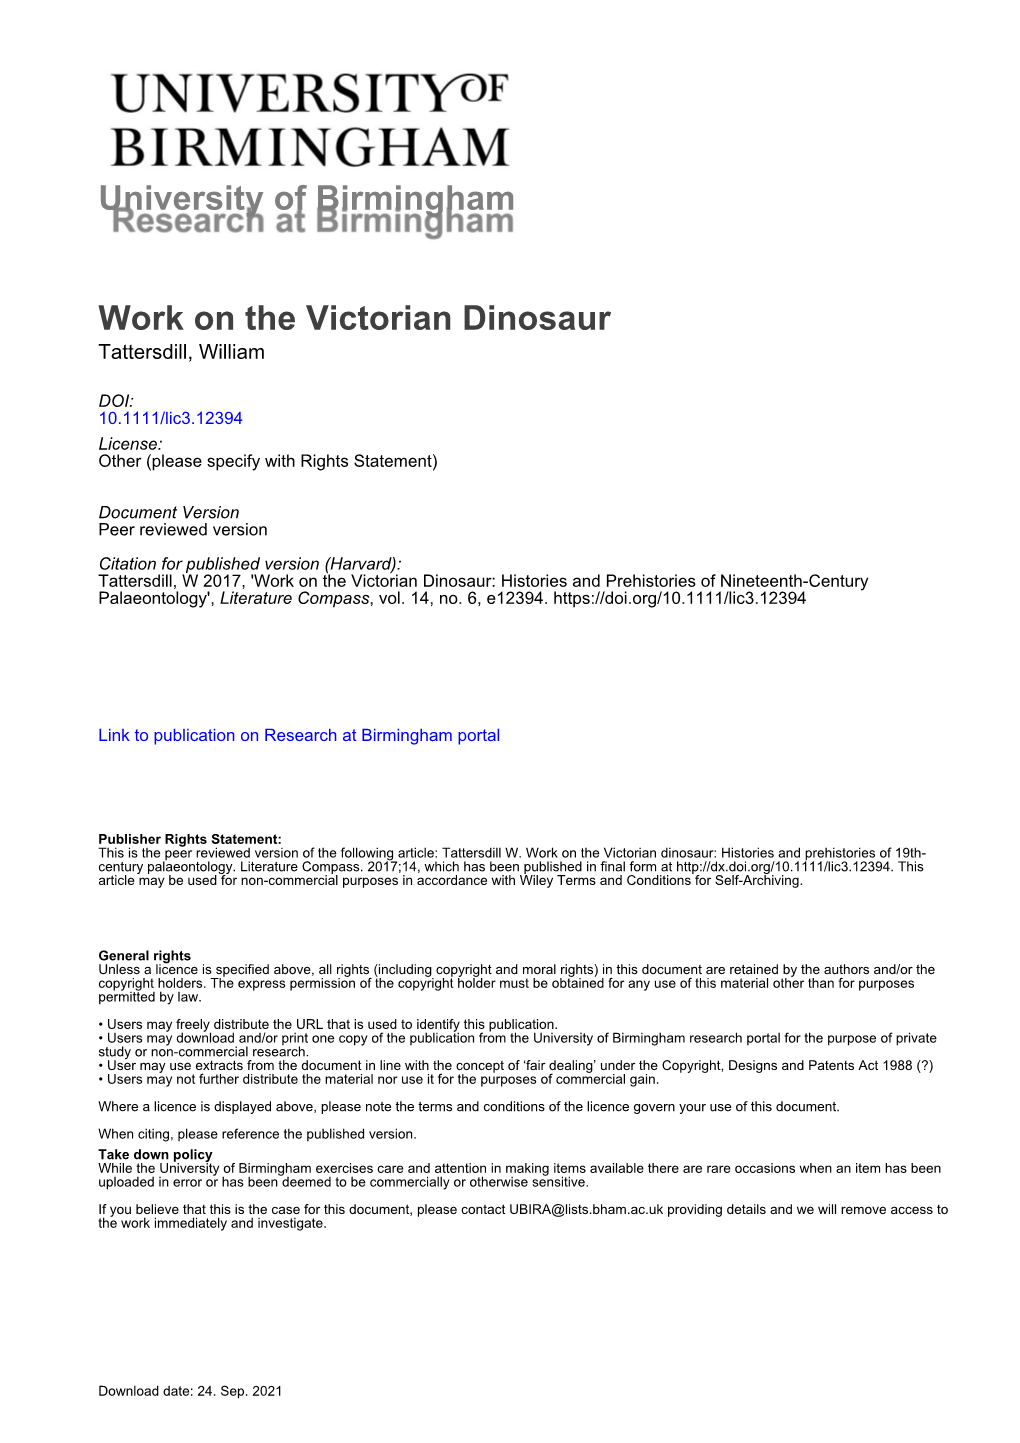 University of Birmingham Work on the Victorian Dinosaur